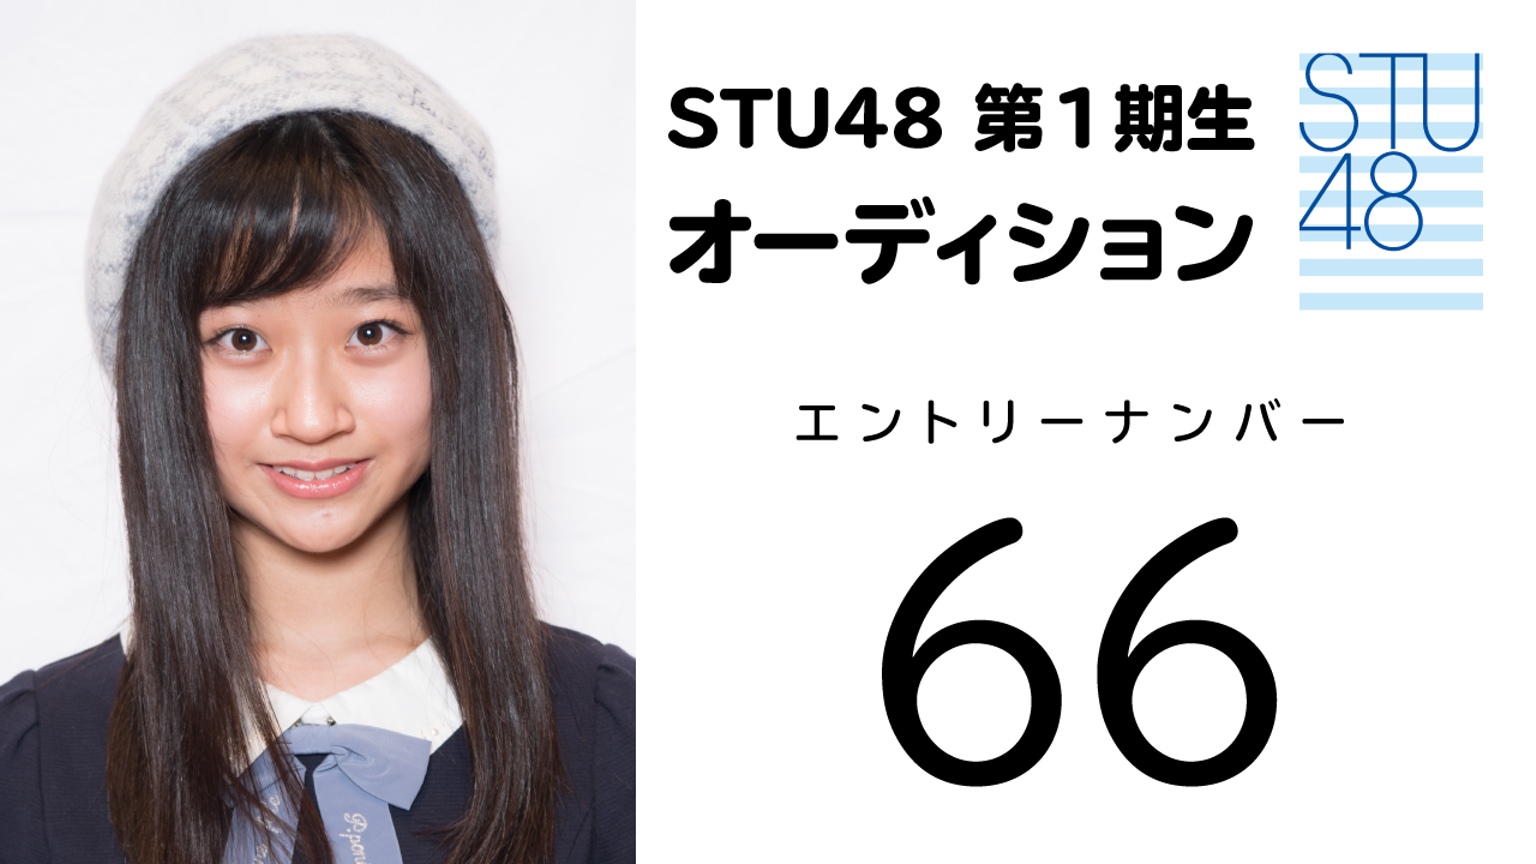 STU48 第1期受験生 エントリーナンバー66番